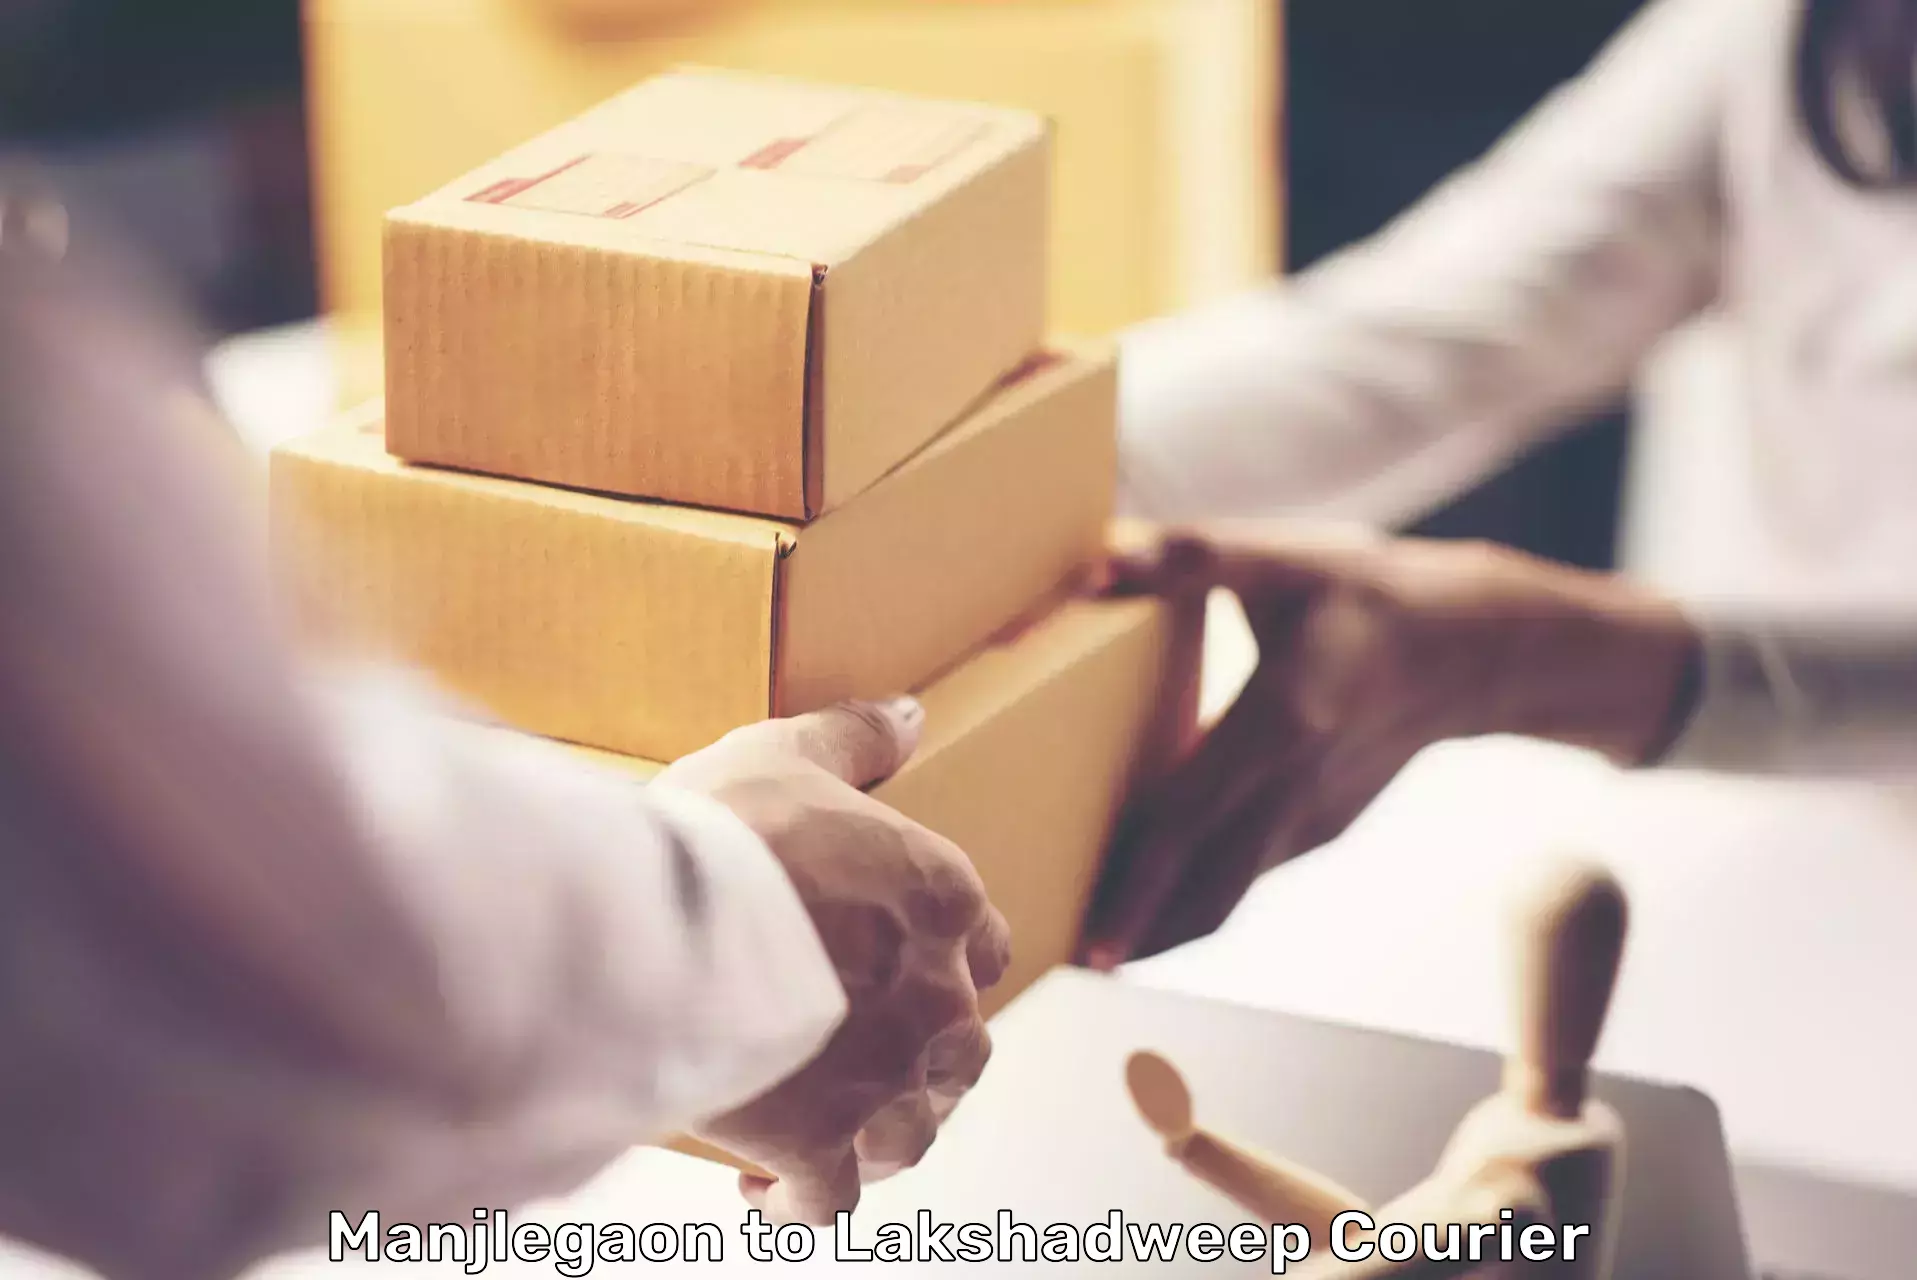 Custom courier packaging Manjlegaon to Lakshadweep